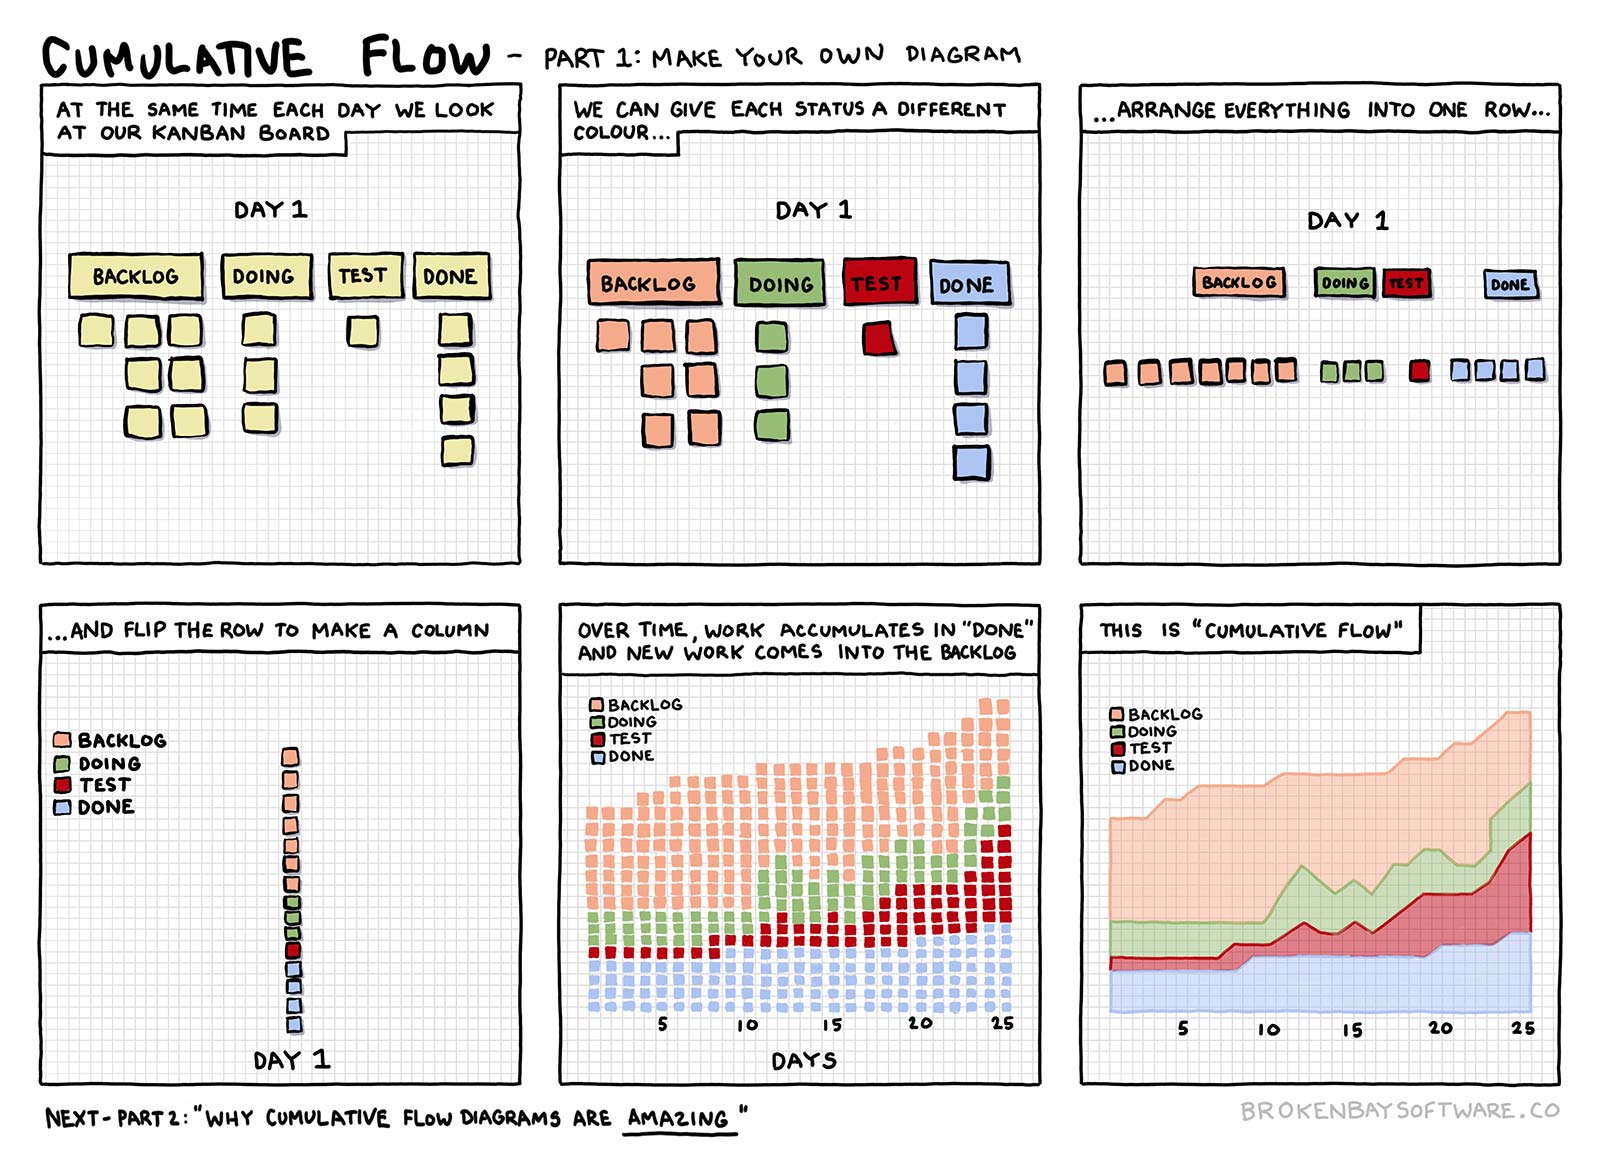 Cumulative Flow - Part 1